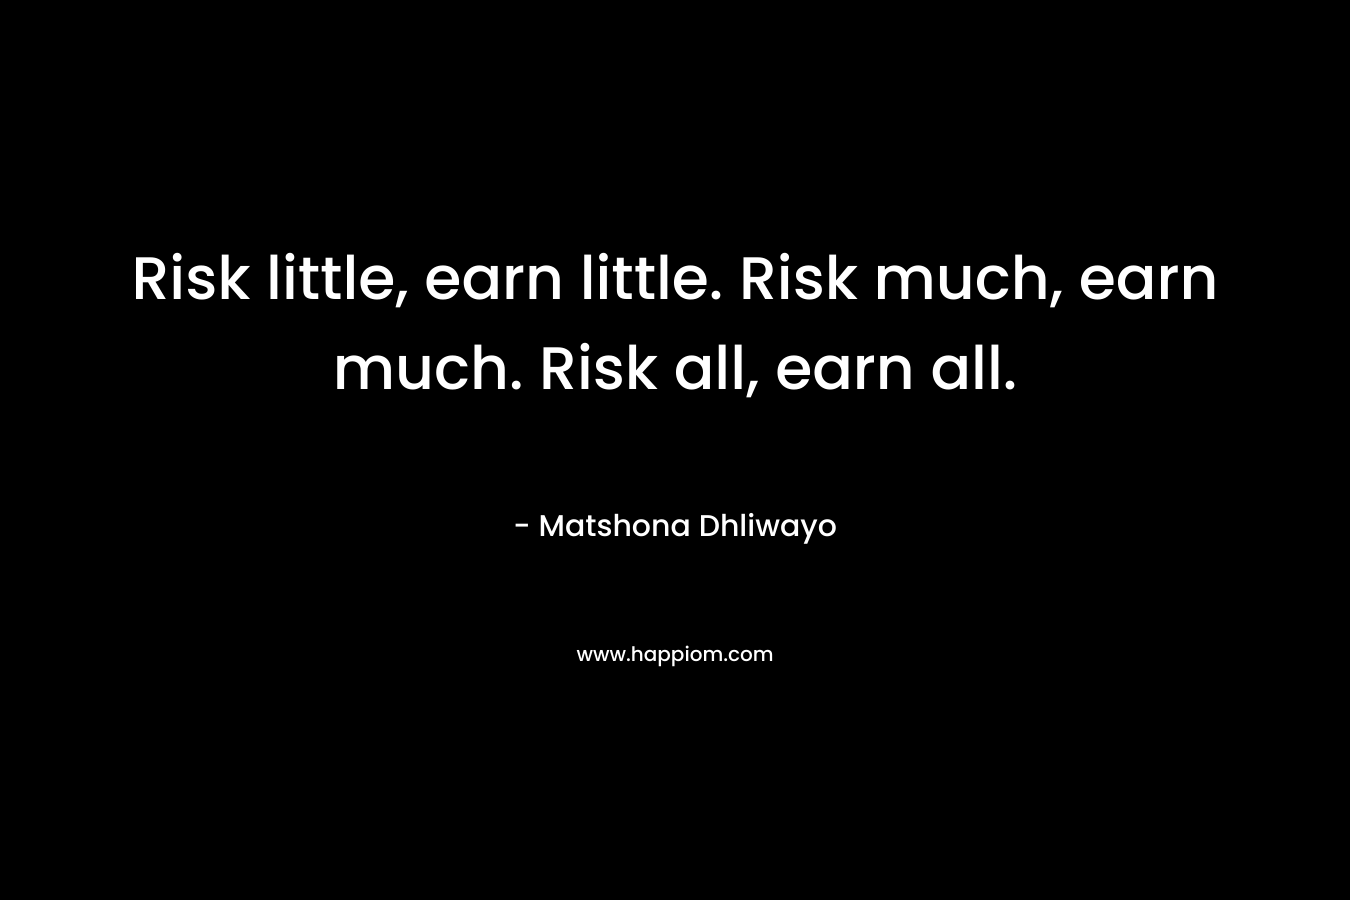 Risk little, earn little. Risk much, earn much. Risk all, earn all.